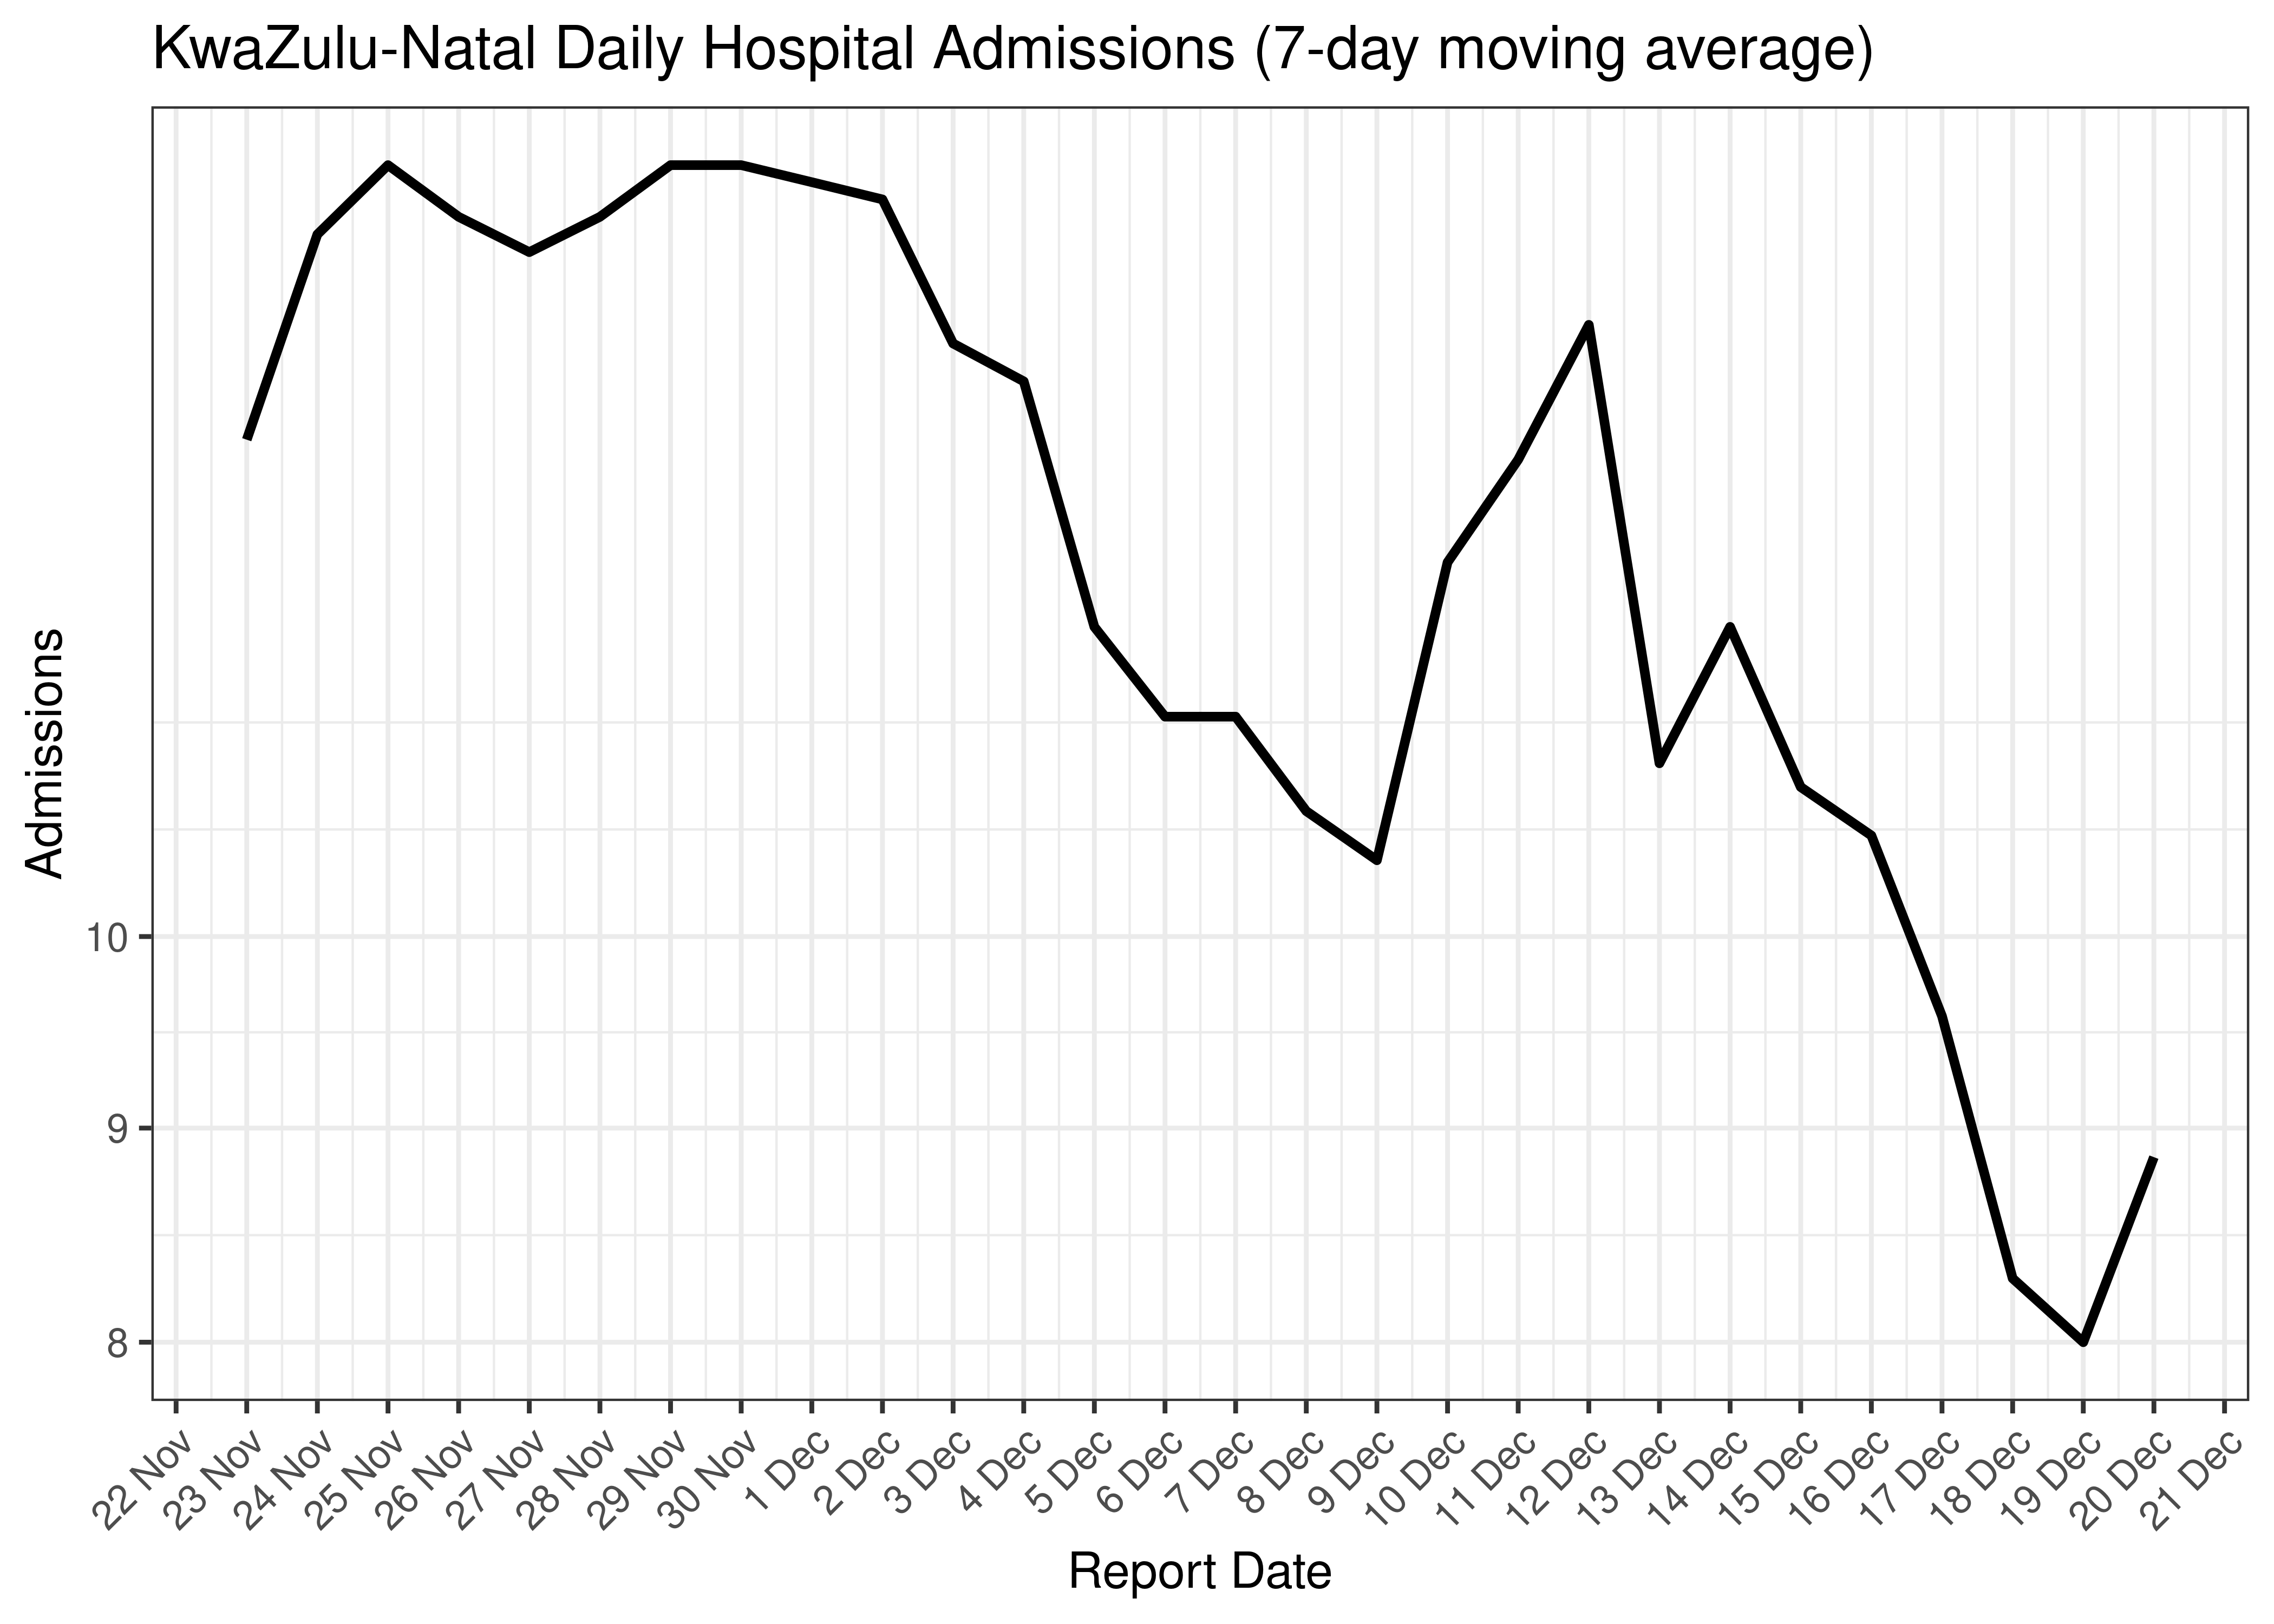 KwaZulu-Natal Daily Hospital Admissions for Last 30-days (7-day moving average)